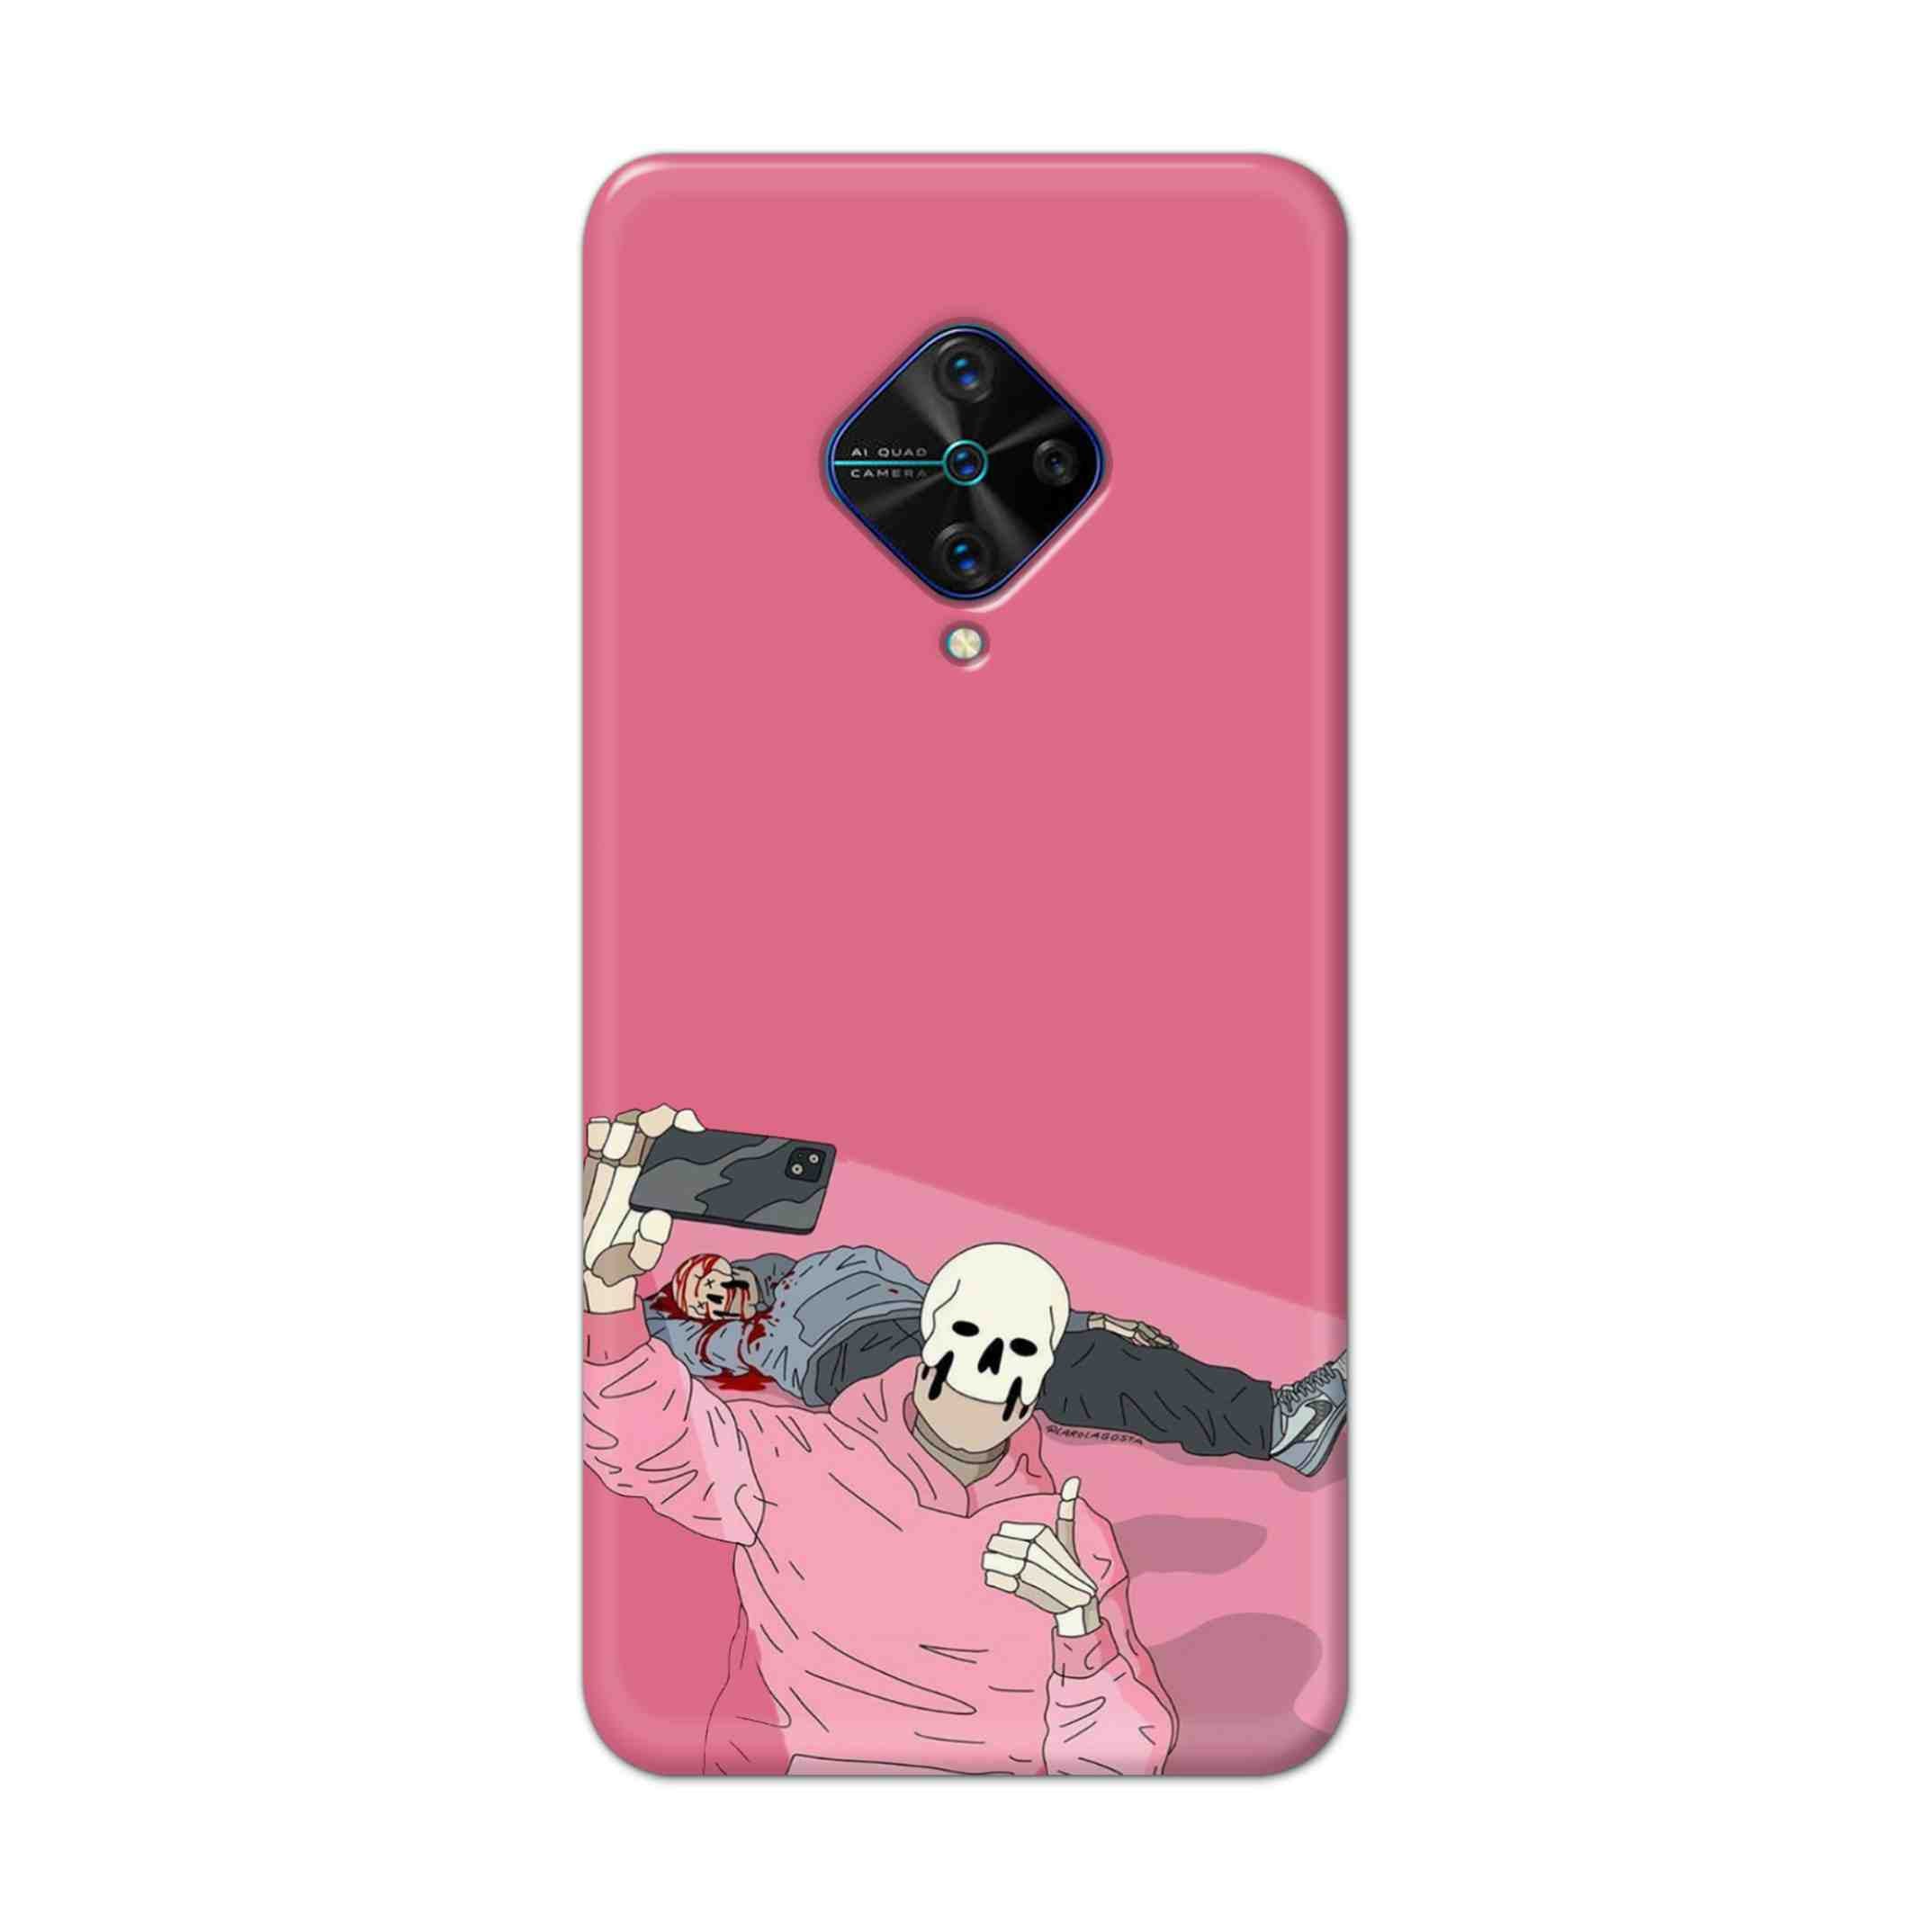 Buy Selfie Hard Back Mobile Phone Case Cover For Vivo S1 Pro Online